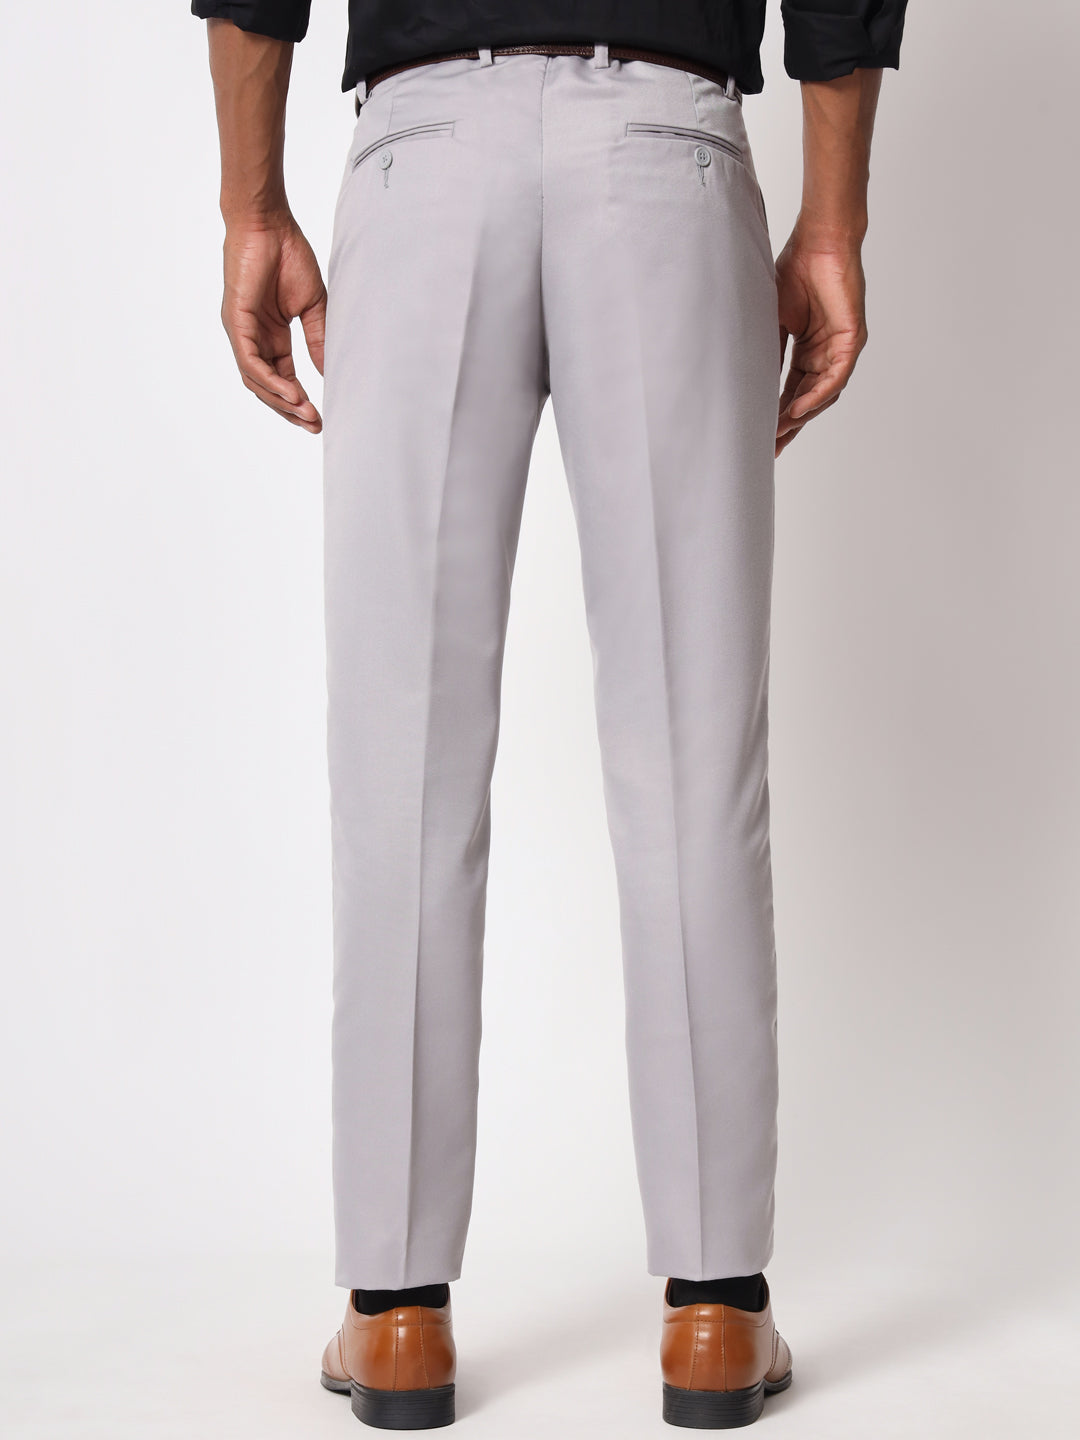 Elegant Light Grey Polycotton Regular Fit Solid Formal Trousers For Men